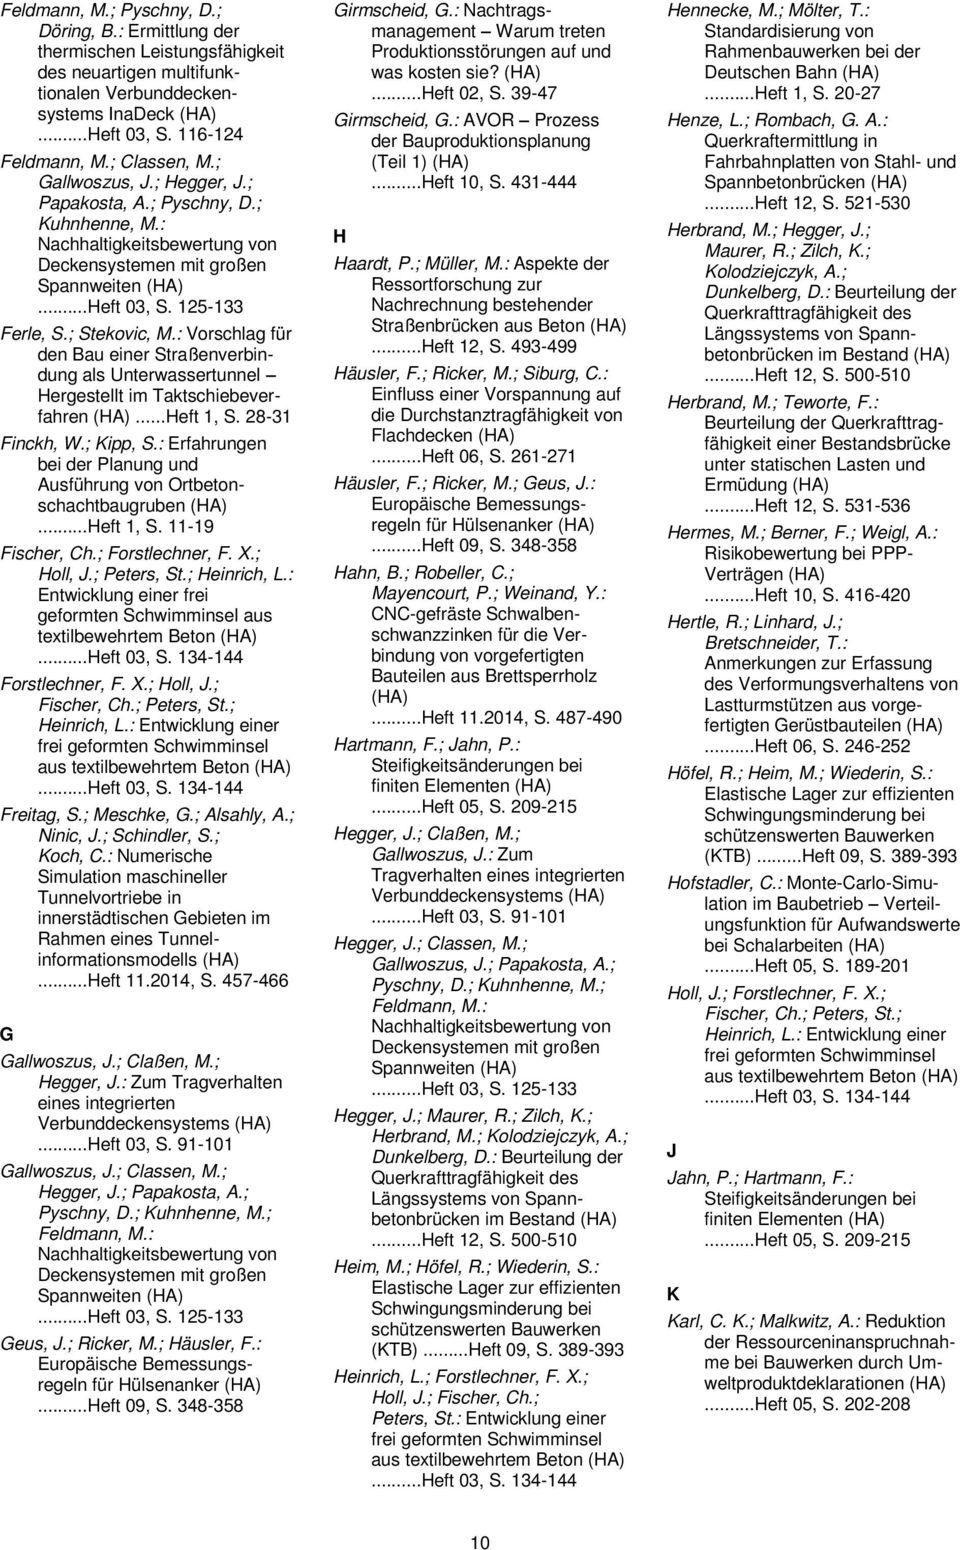 ..Heft 1, S. 28-31 Finckh, W.; Kipp, S.: Erfahrungen bei der Planung und Ausführung von Ortbetonschachtbaugruben...Heft 1, S. 11-19 Fischer, Ch.; Forstlechner, F. X.; Holl, J.; Peters, St.